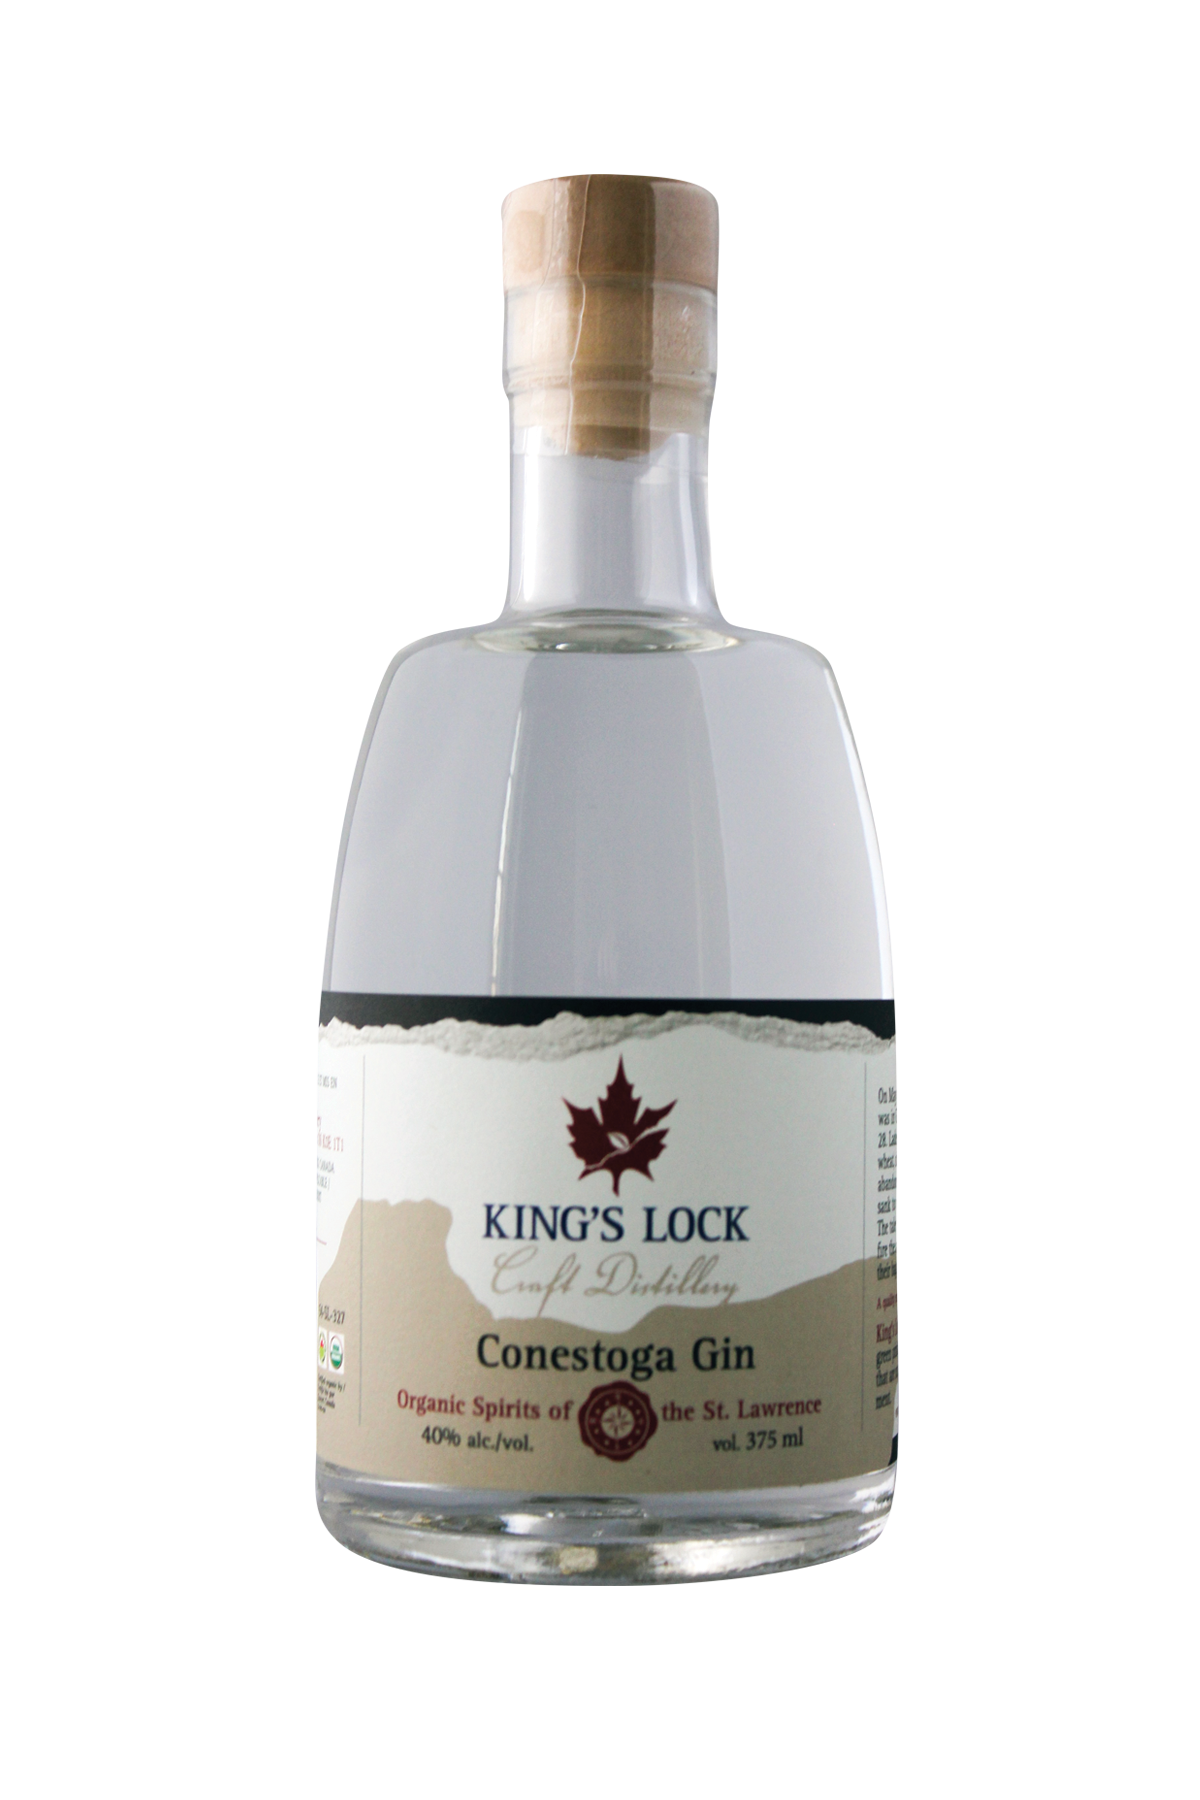 A 375 ml bottle of Conestoga Gin, 40% alcohol